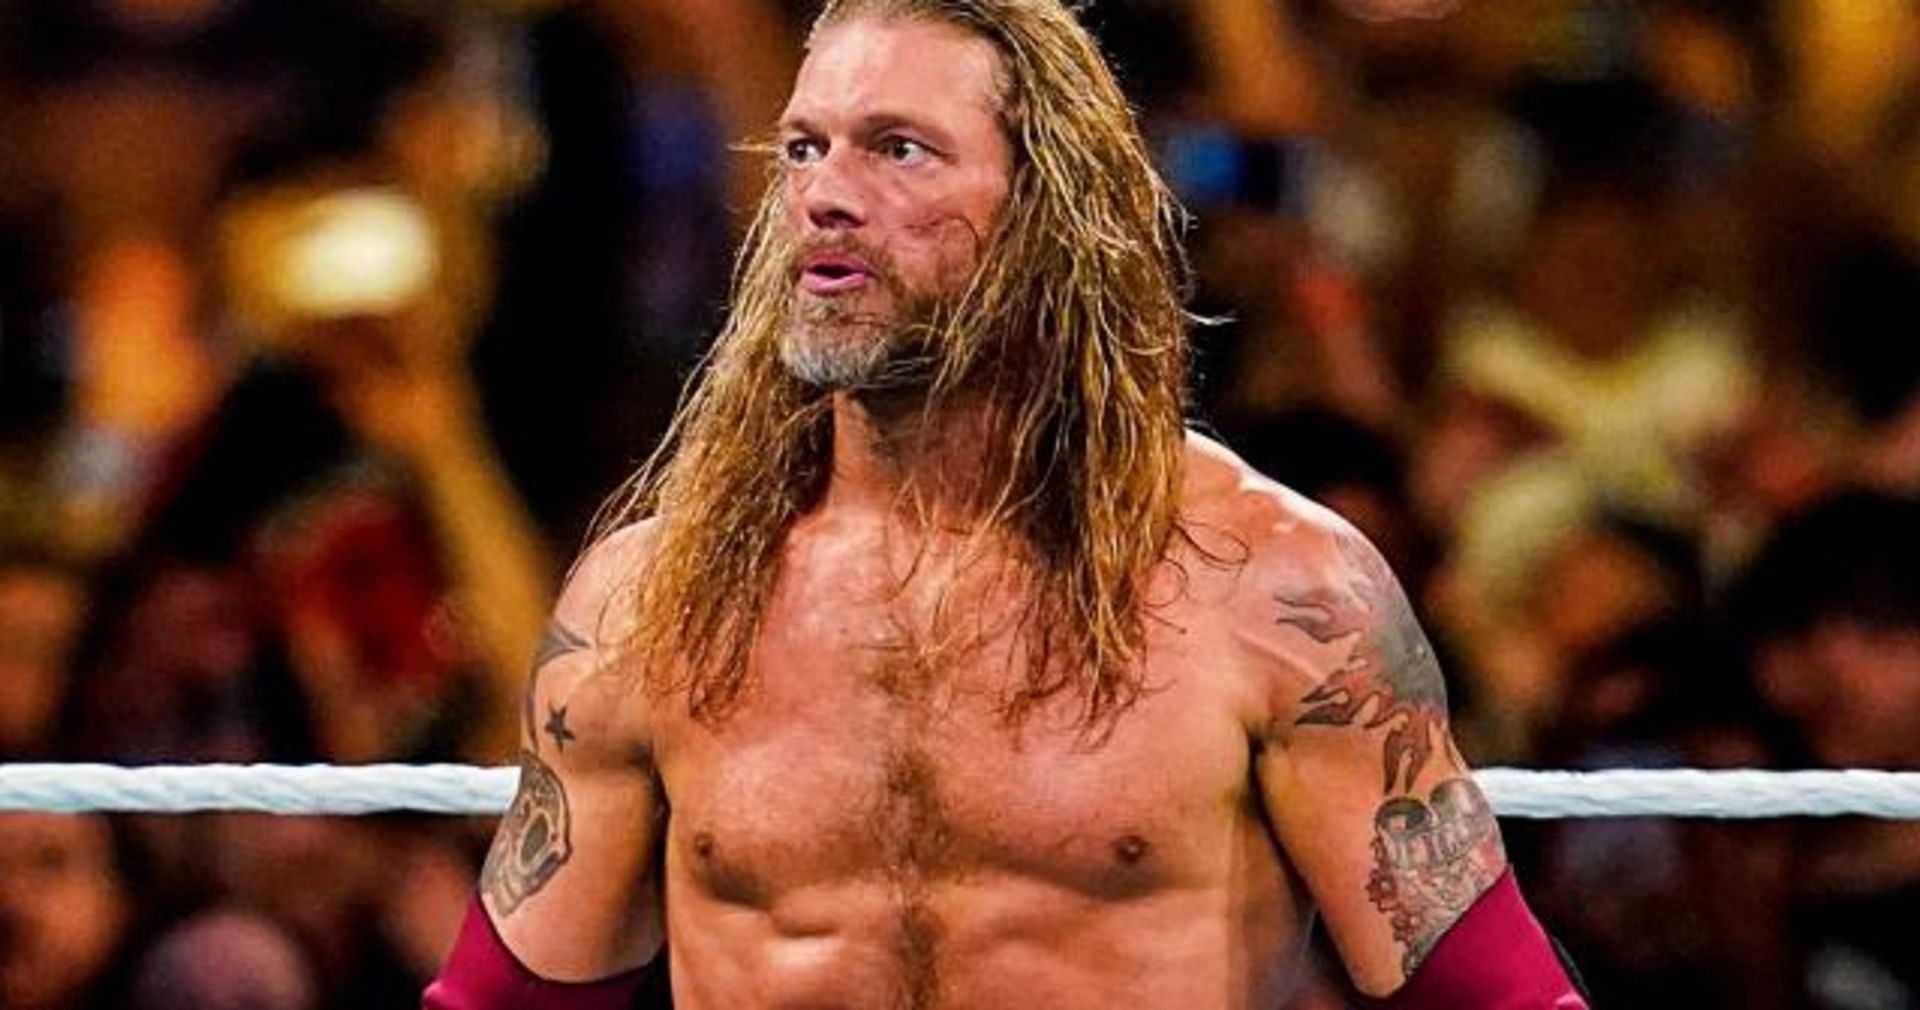 Edge has already hinted at retiring soon.